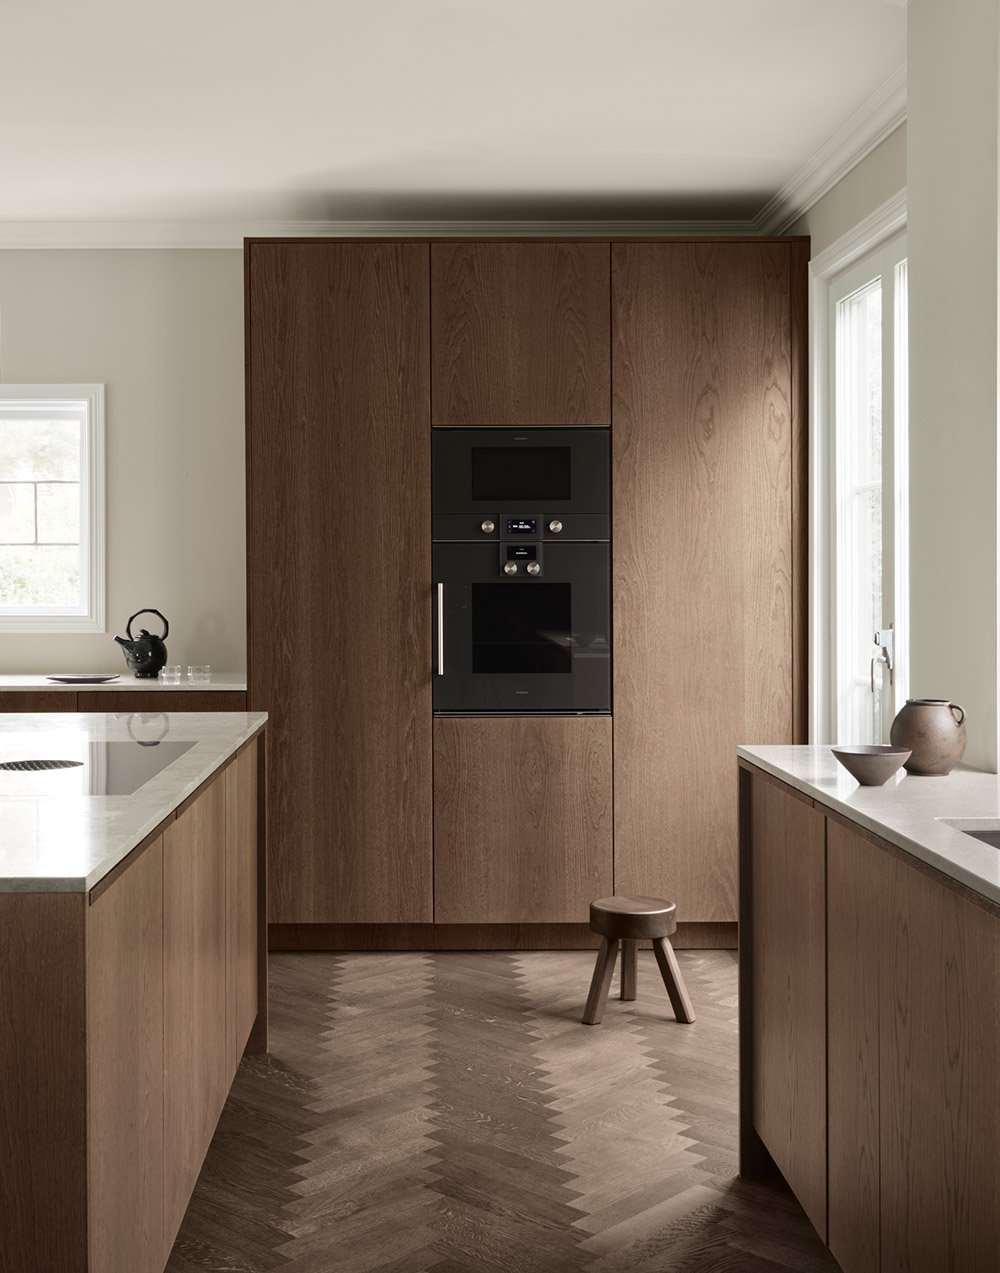 kitchen-inspiration-wooden-kitchen-painted-countertop.jpg